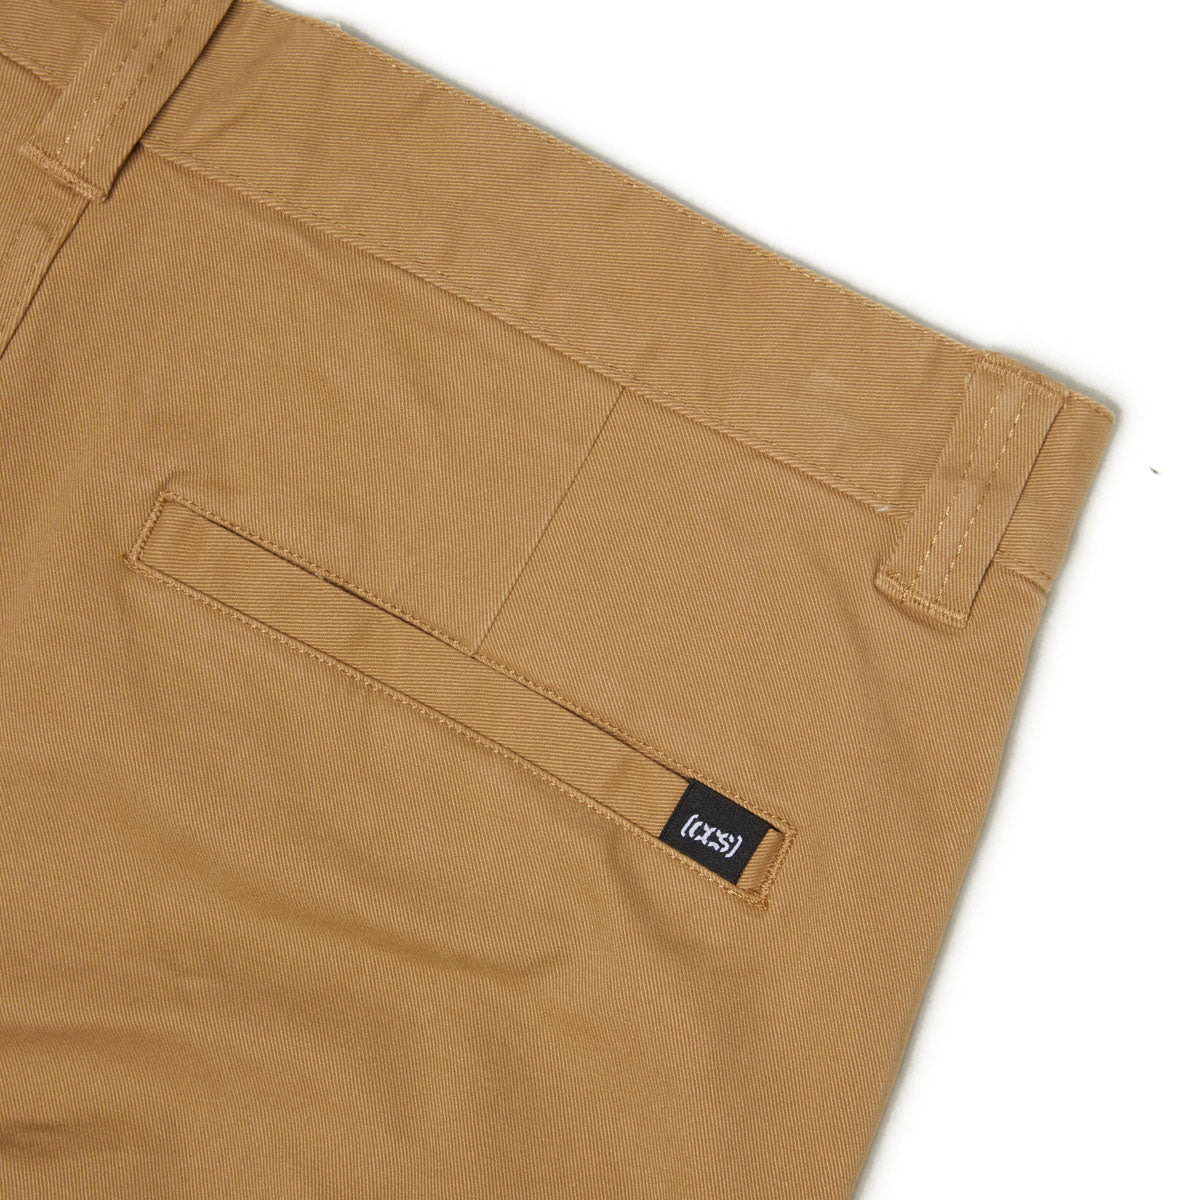 CCS Standard Plus Slim Chino Pants - Khaki image 6